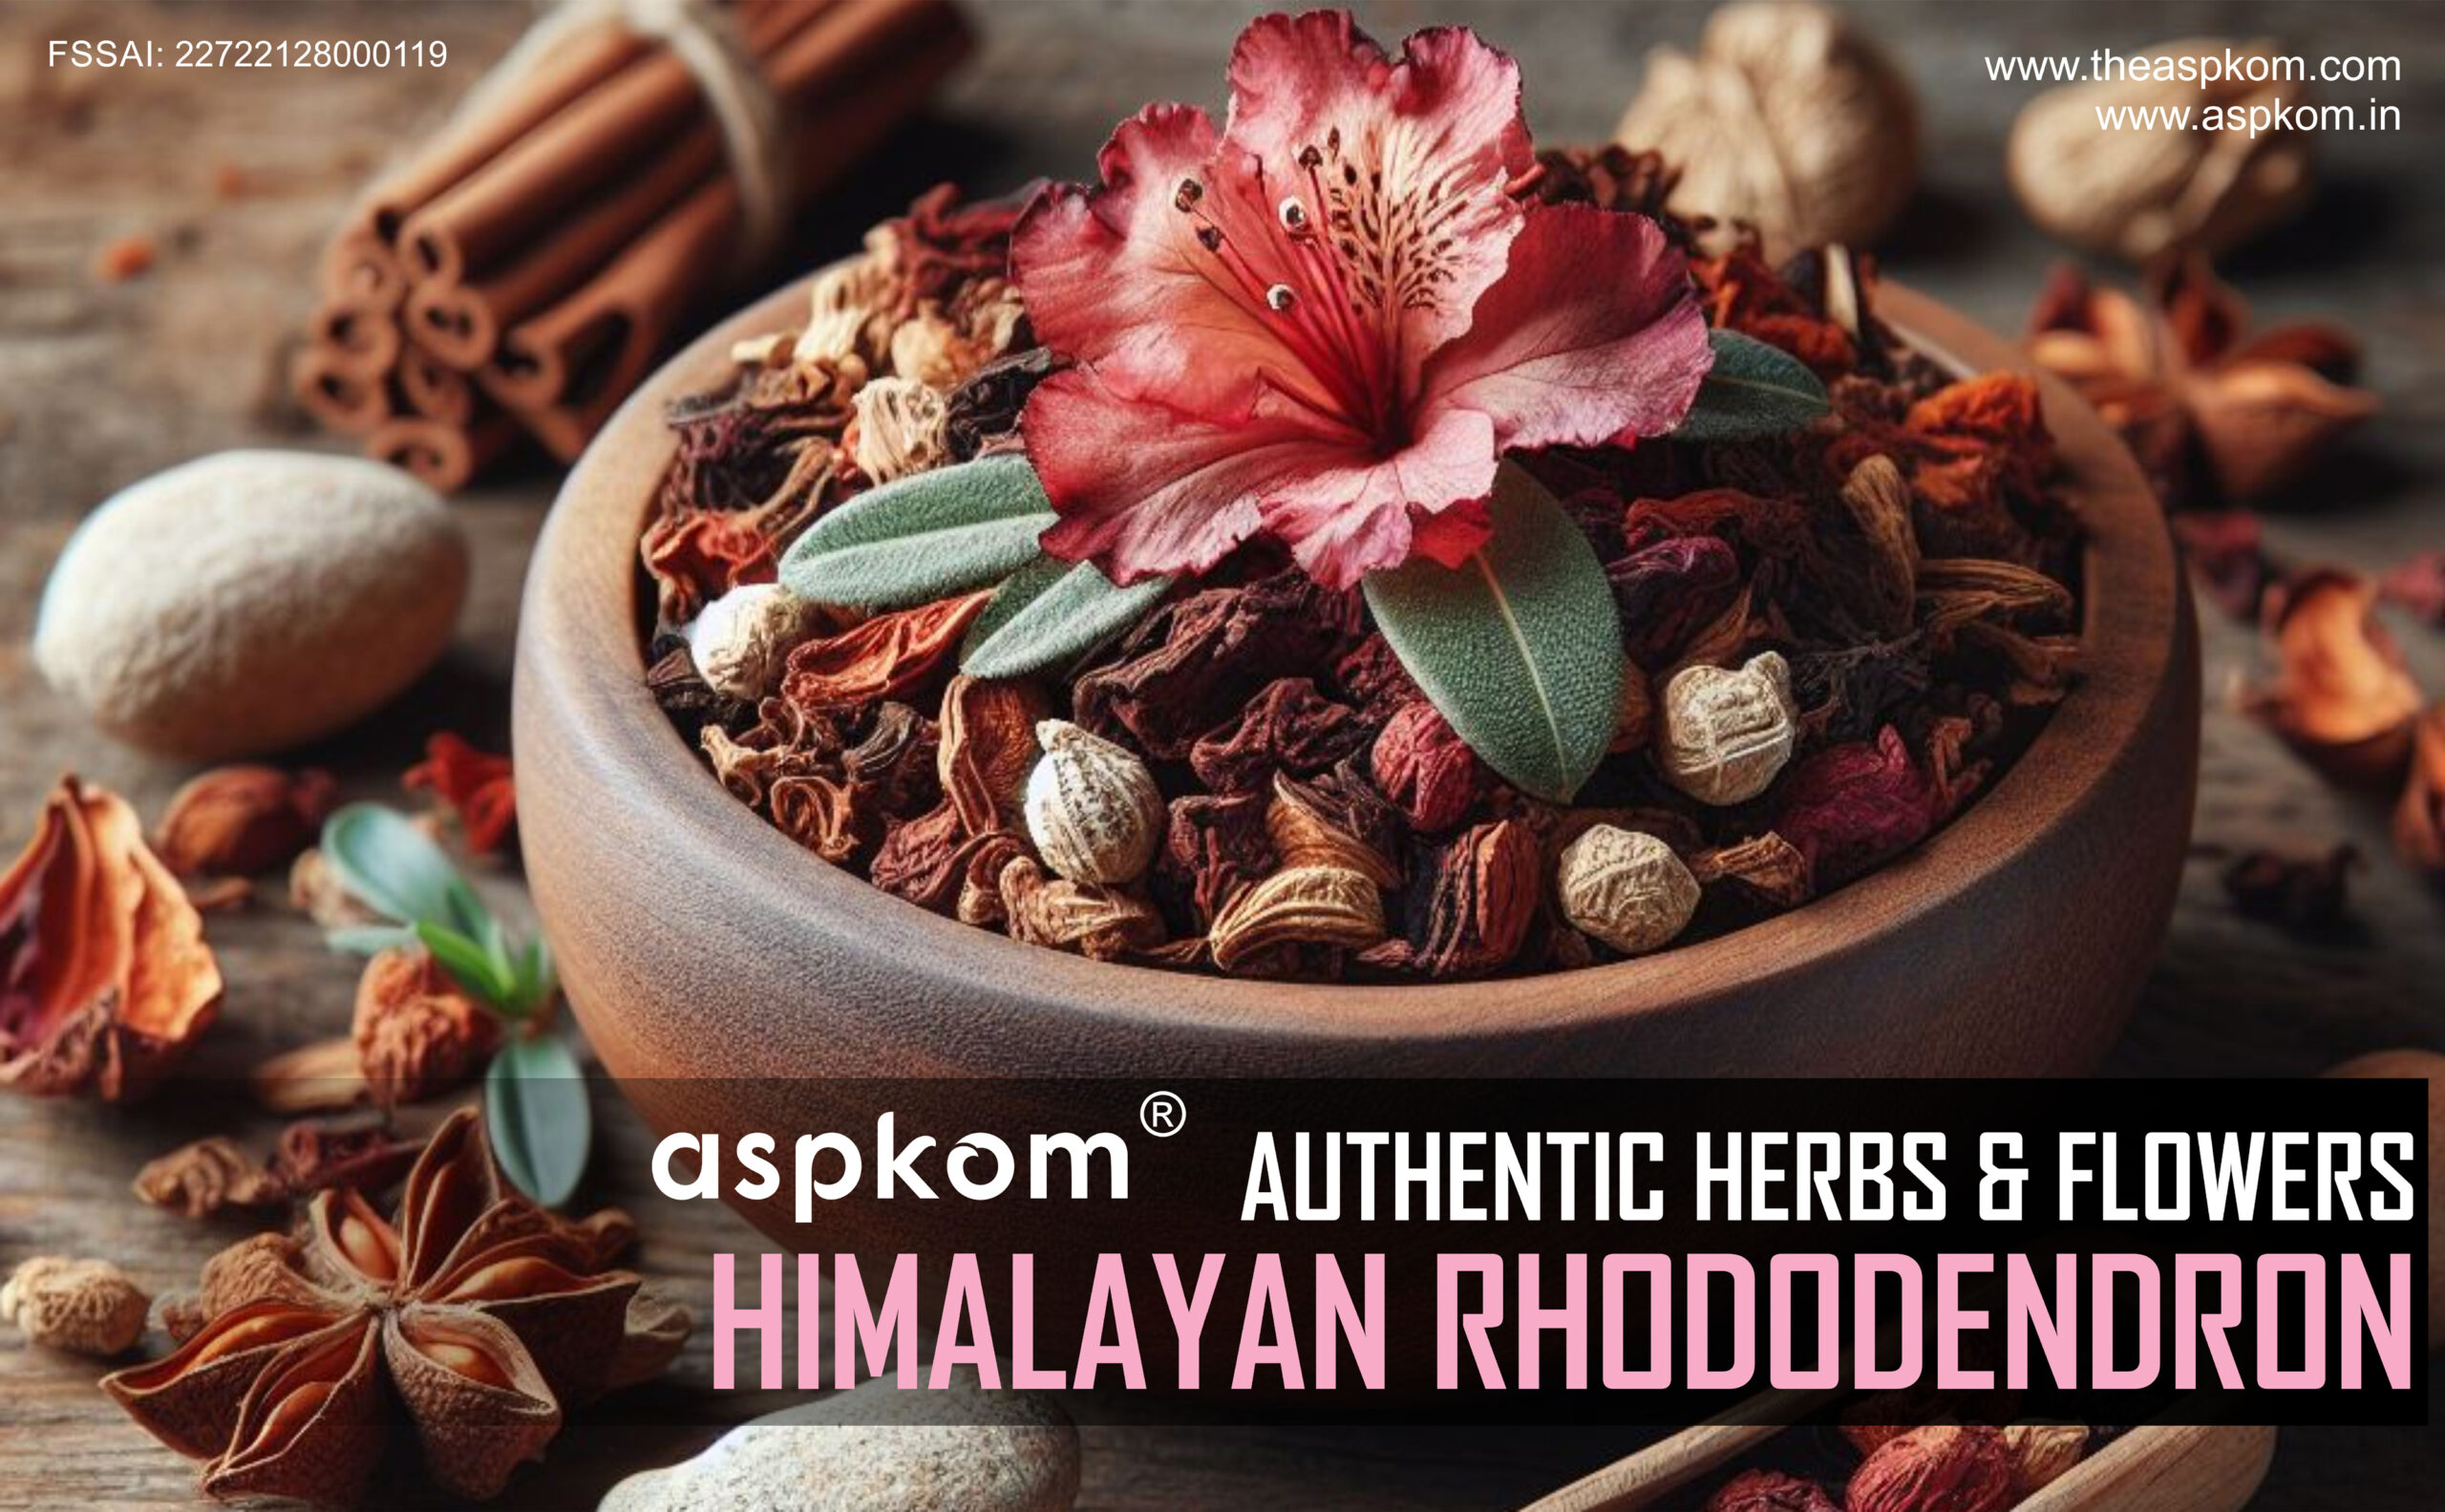 aspkom® Himalayan Rhododendron